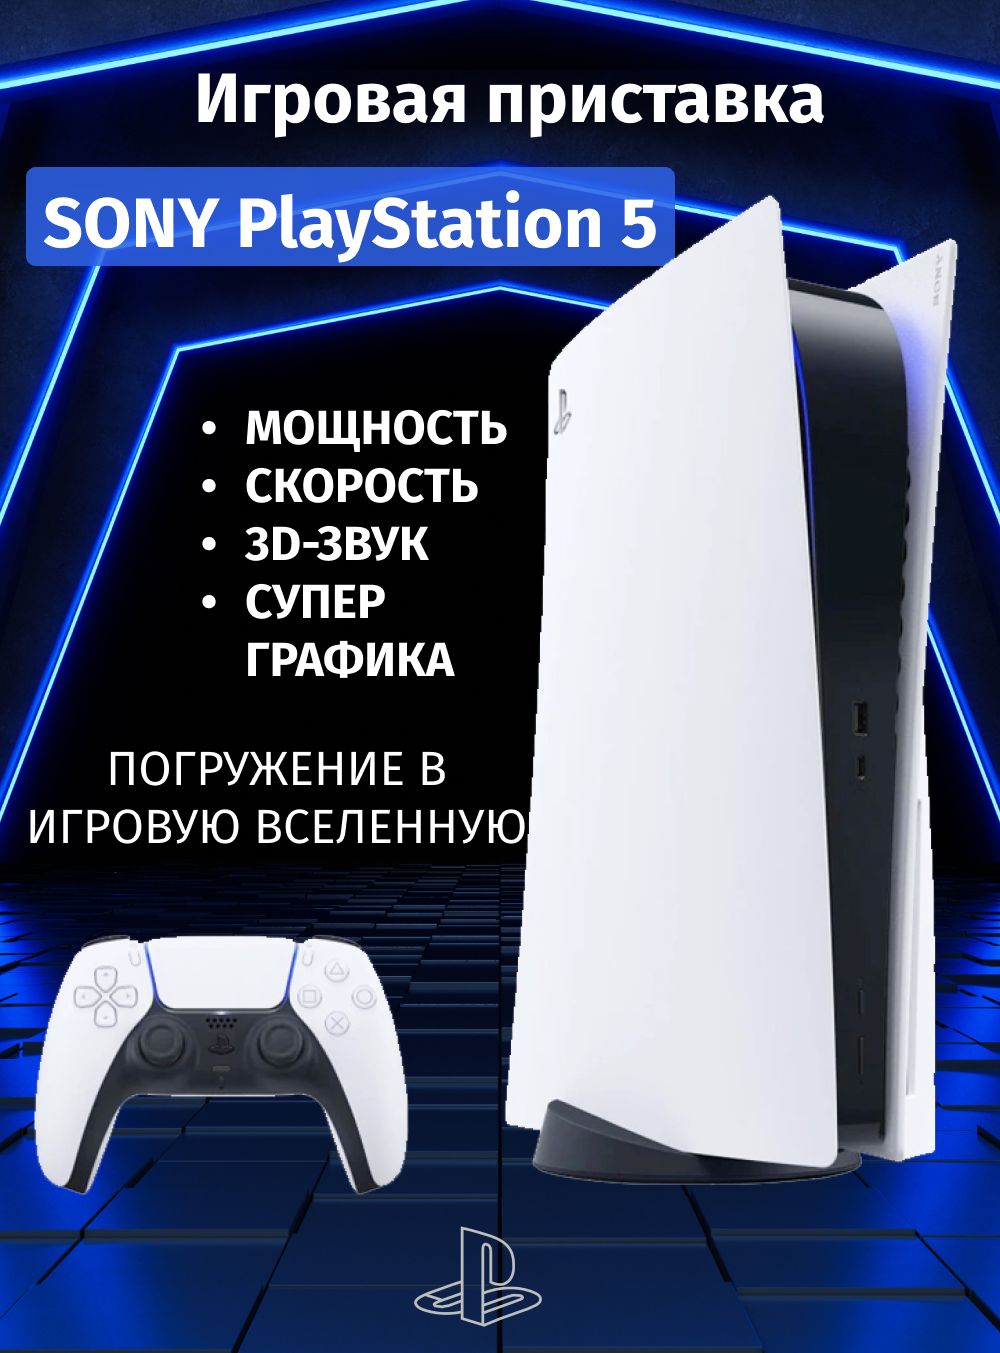 Sony Playstation 5 - PS5 - Mídia Física - CFI-1114A - 825GB 8K Bivolt -  Nacional